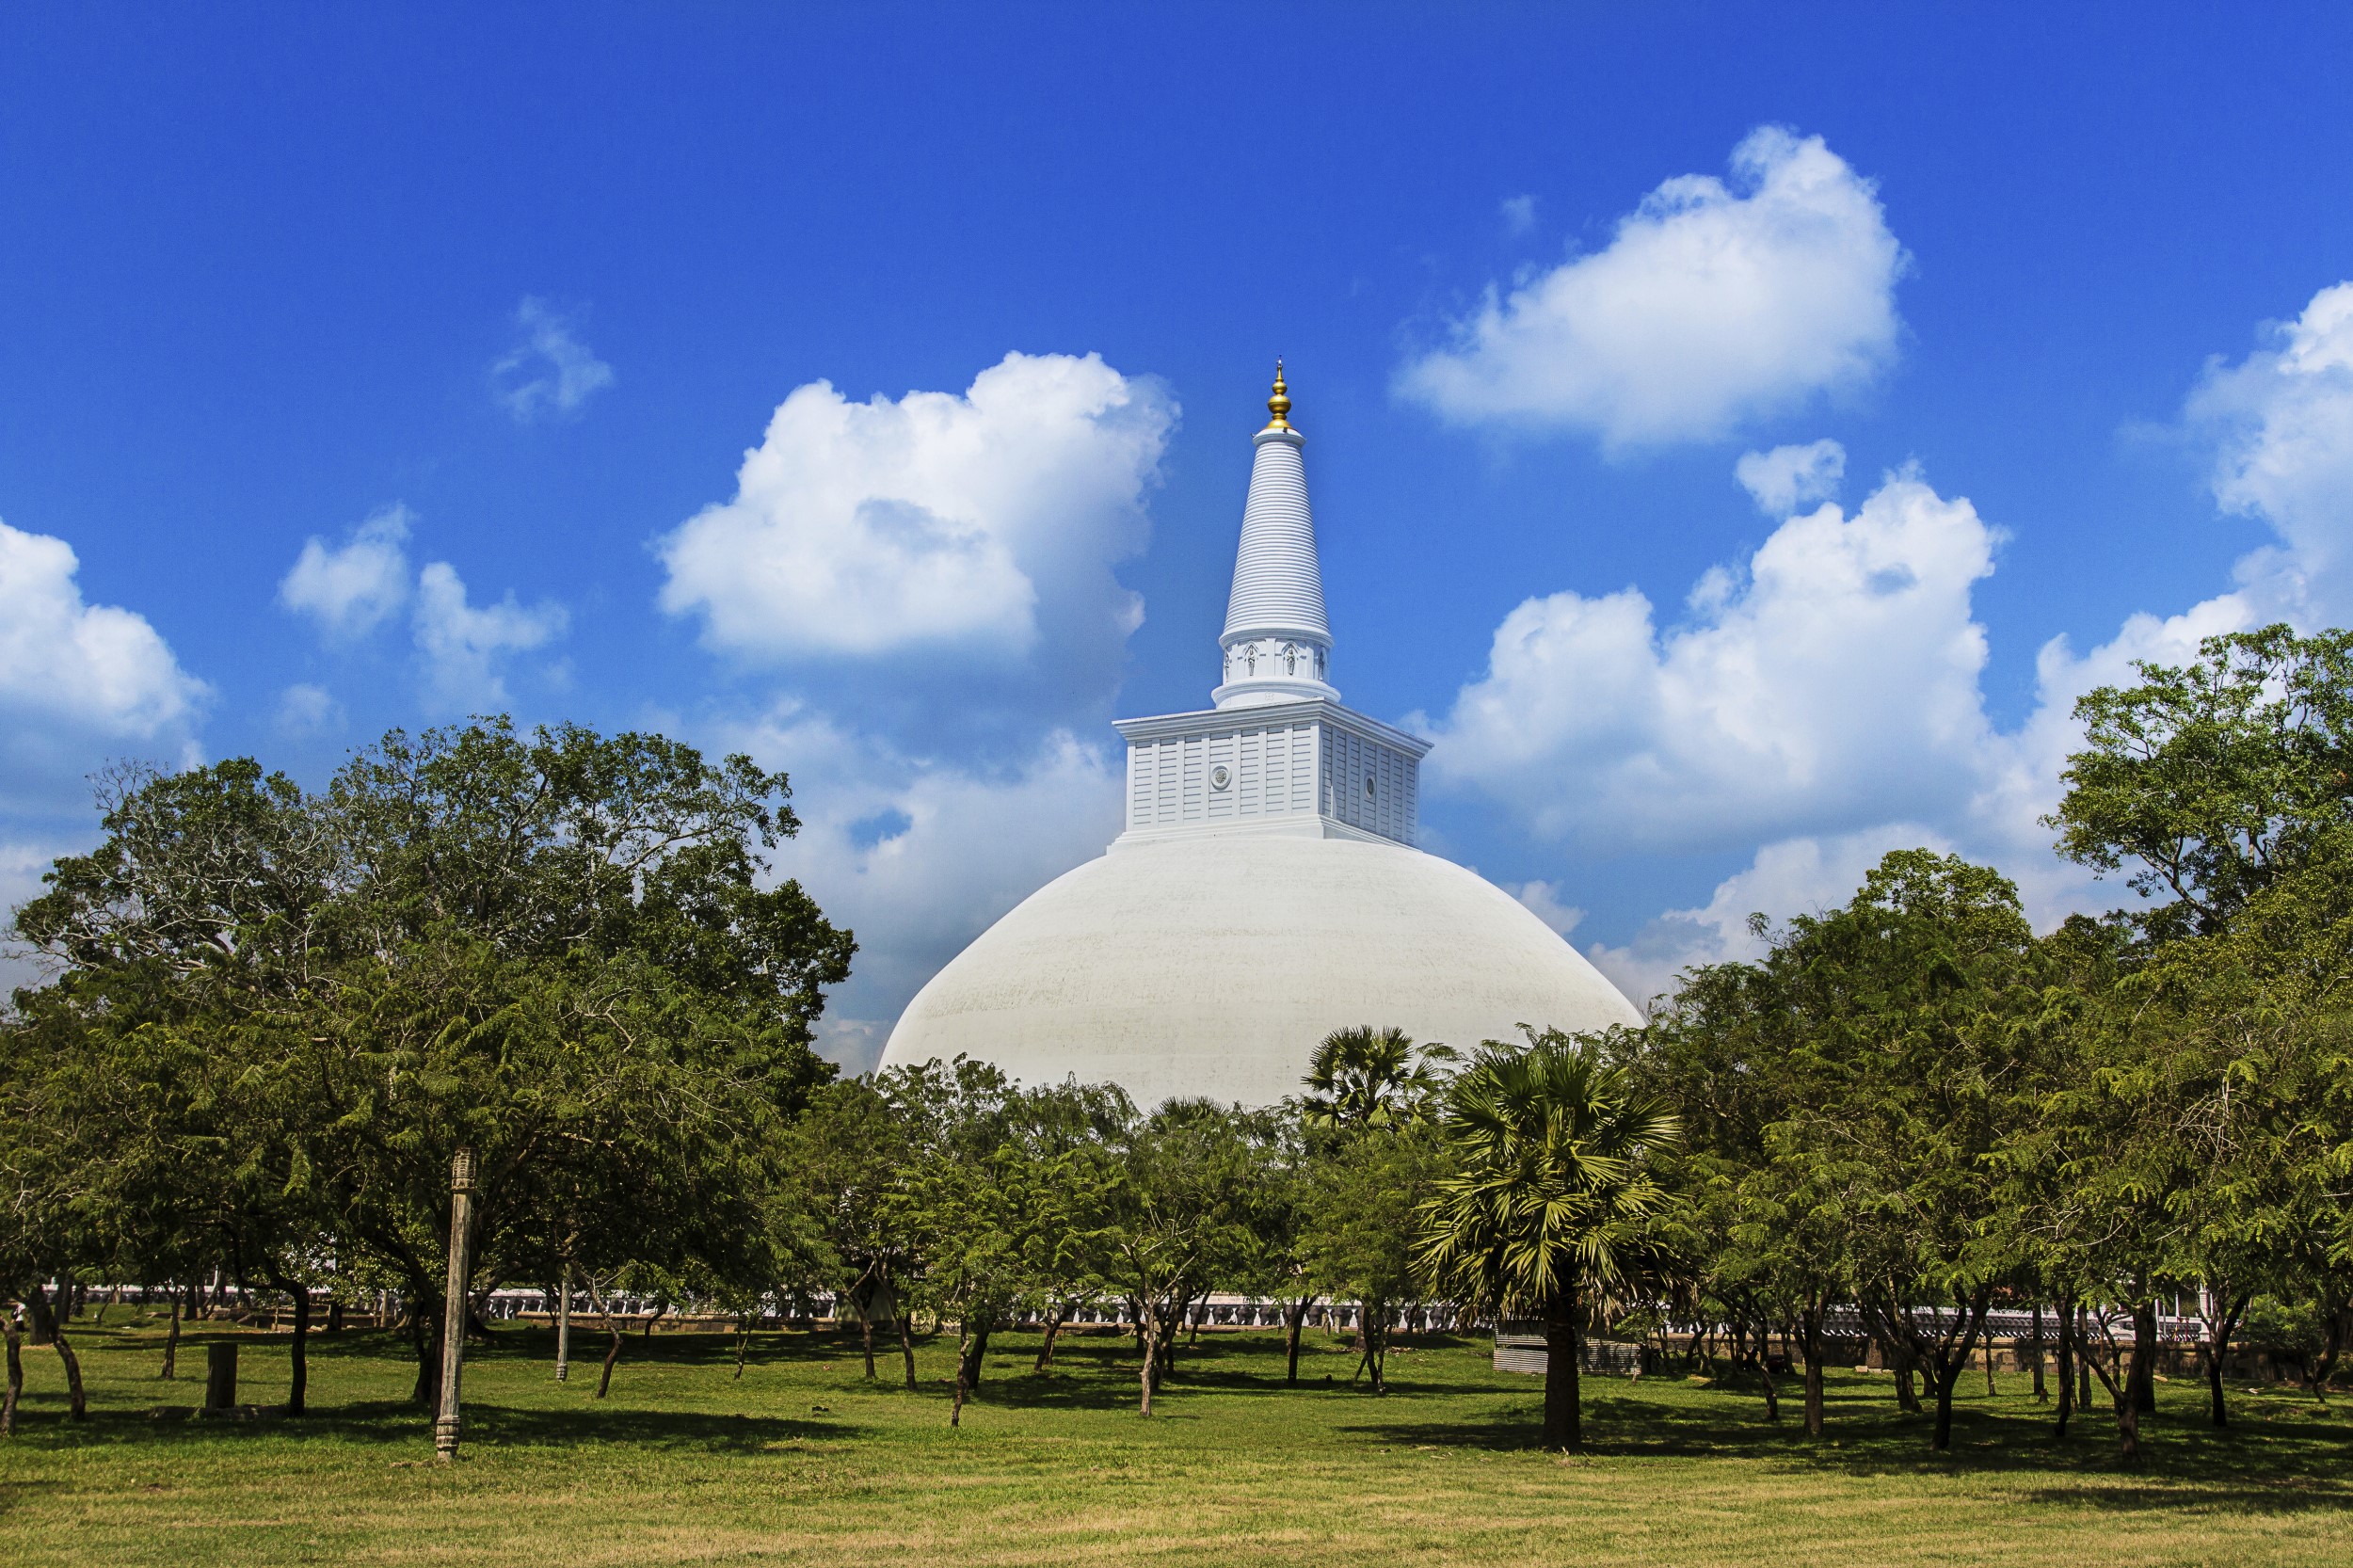 Home Istock Sri Lanka Anuradhapura Culturele driehoek stoepa cultuur tempel